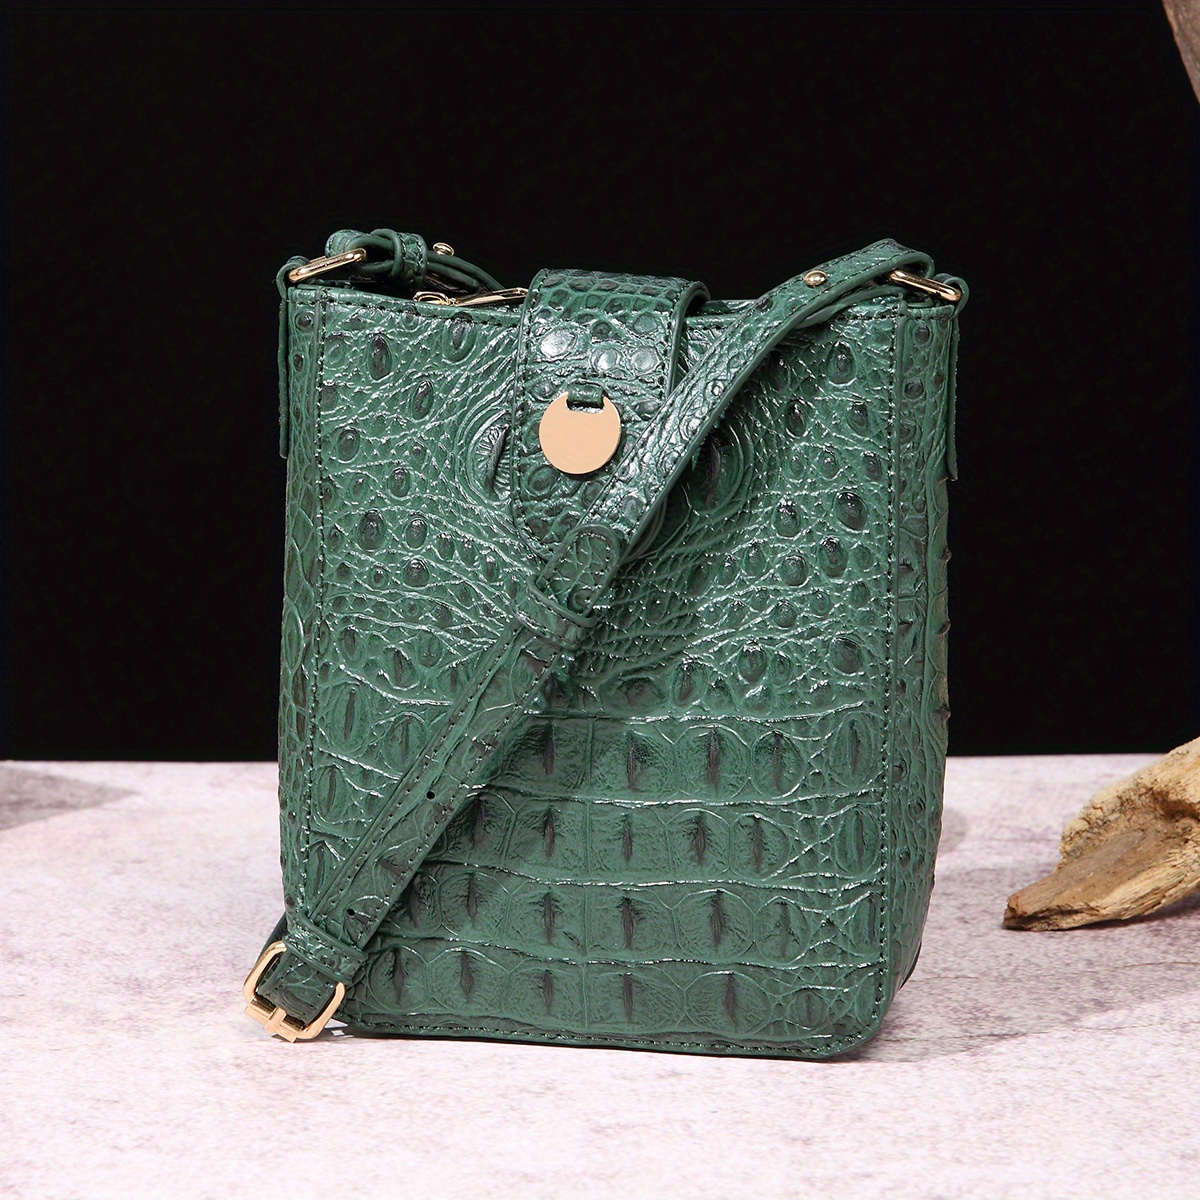  Satchel Bag Women’s Vegan Leather Crocodile-Embossed Pattern  With Top Handle Large Shoulder Bags Handbags (Blue) : Clothing, Shoes 